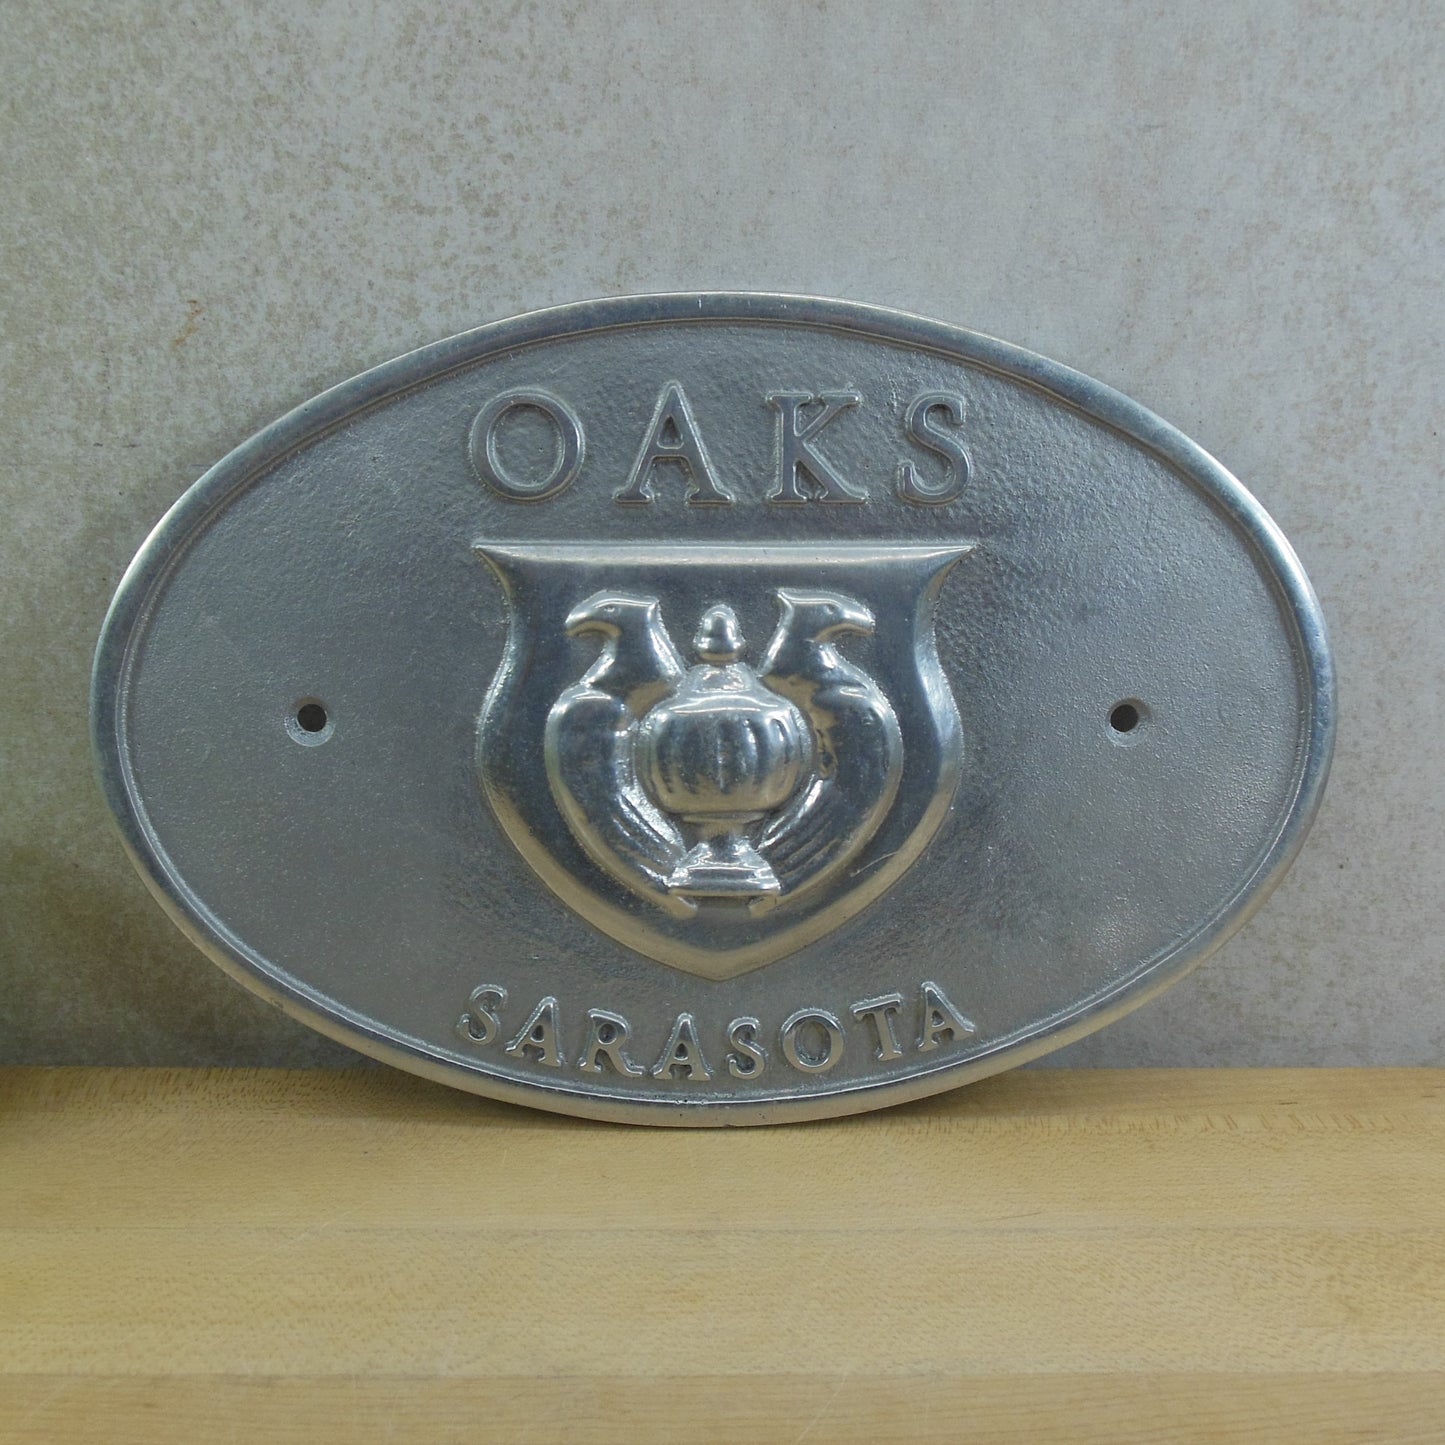 The Oaks Club Osprey Sarasota FL Aluminum Plaque Sign License Tag